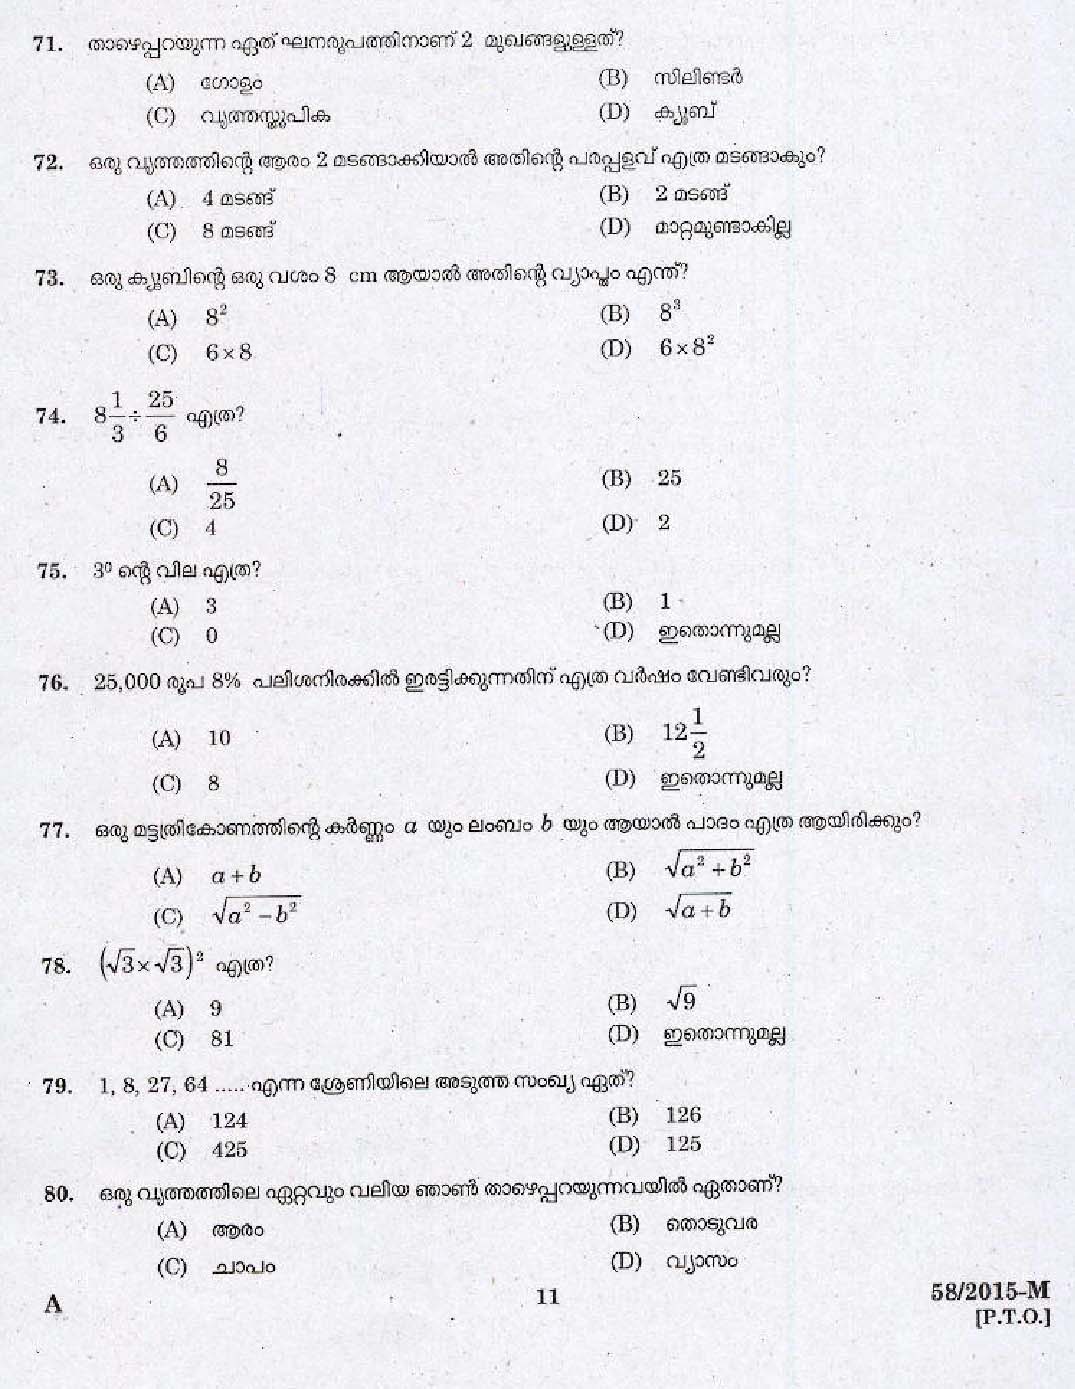 Kerala PSC Attender Exam 2015 Question Paper Code 582015 M 9